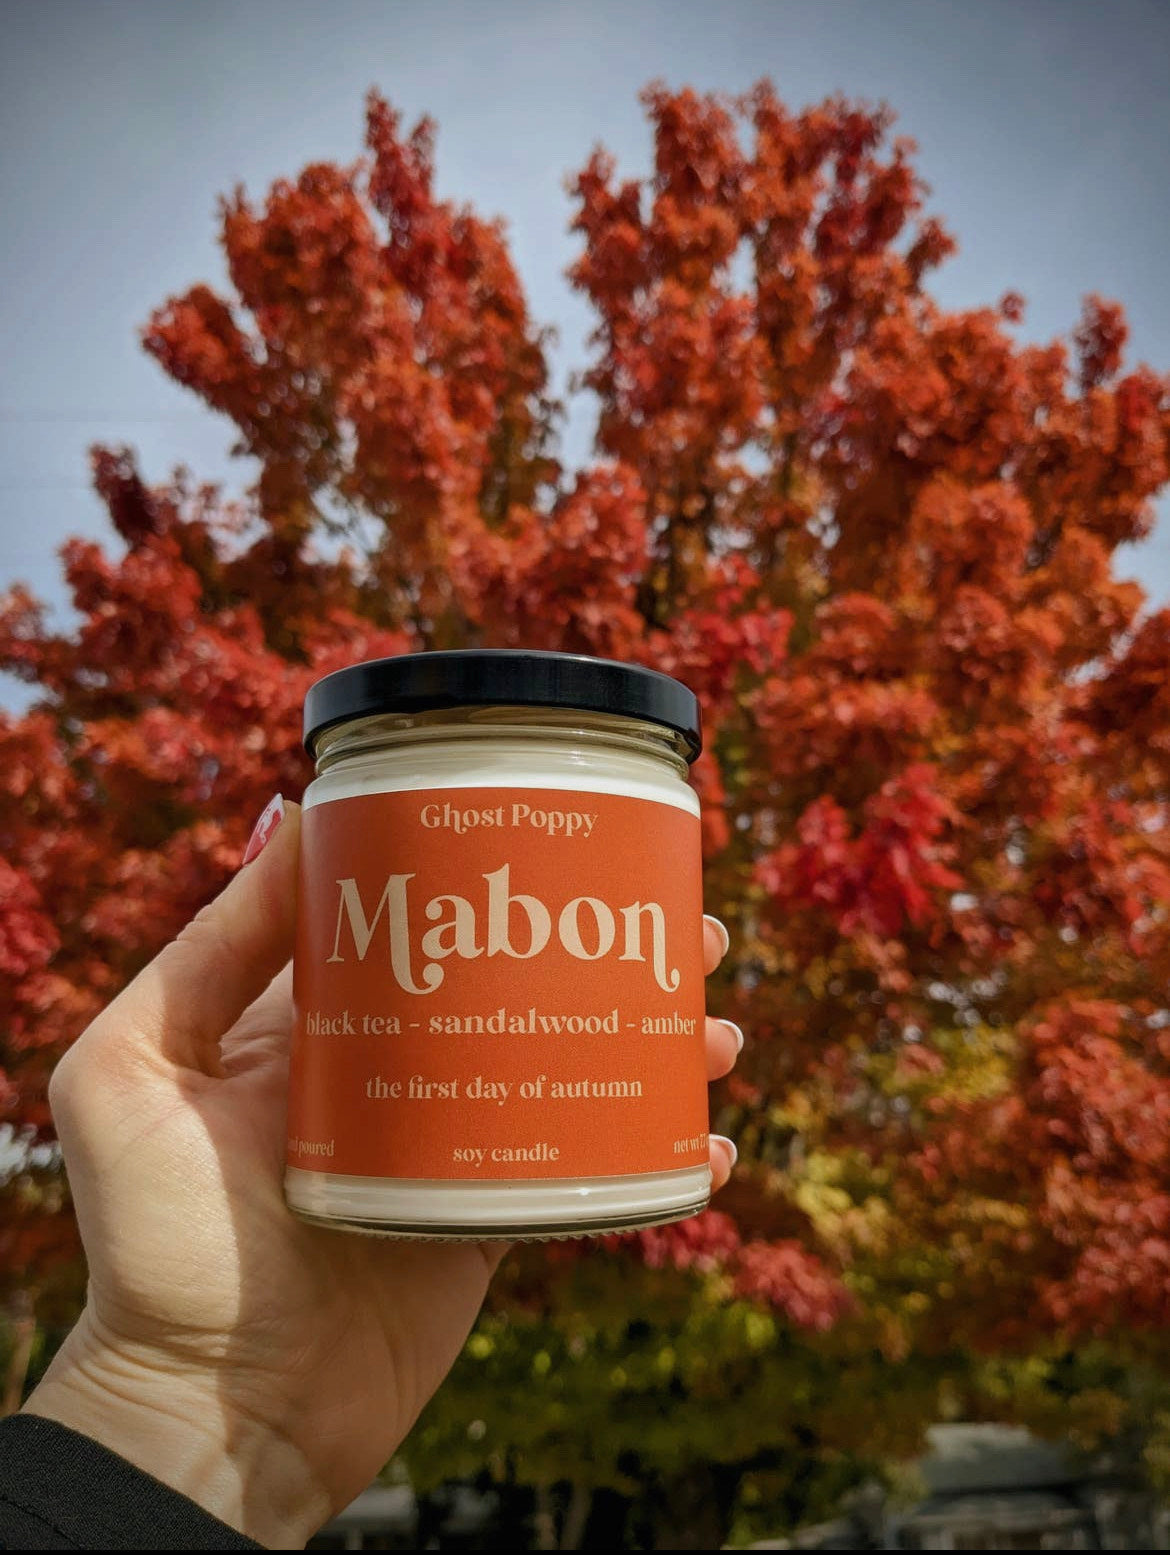 Mabon / Autumn Equinox Candle